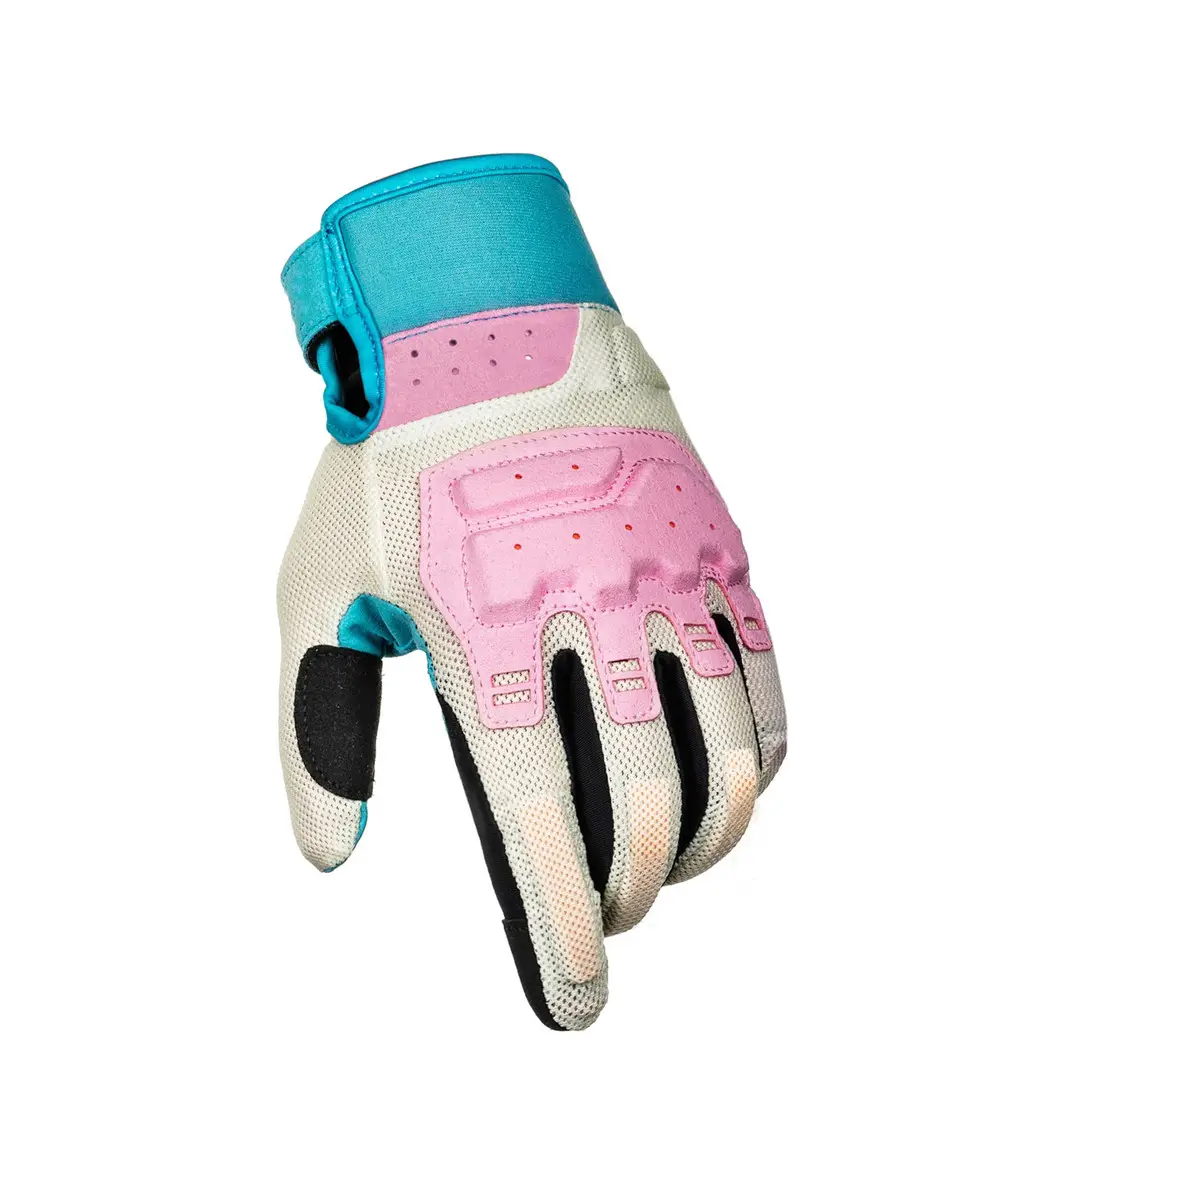 Guanti da Motocross personalizzati di migliore qualità guanti da corsa fuoristrada da corsa pilota guanti da bici uomo donna